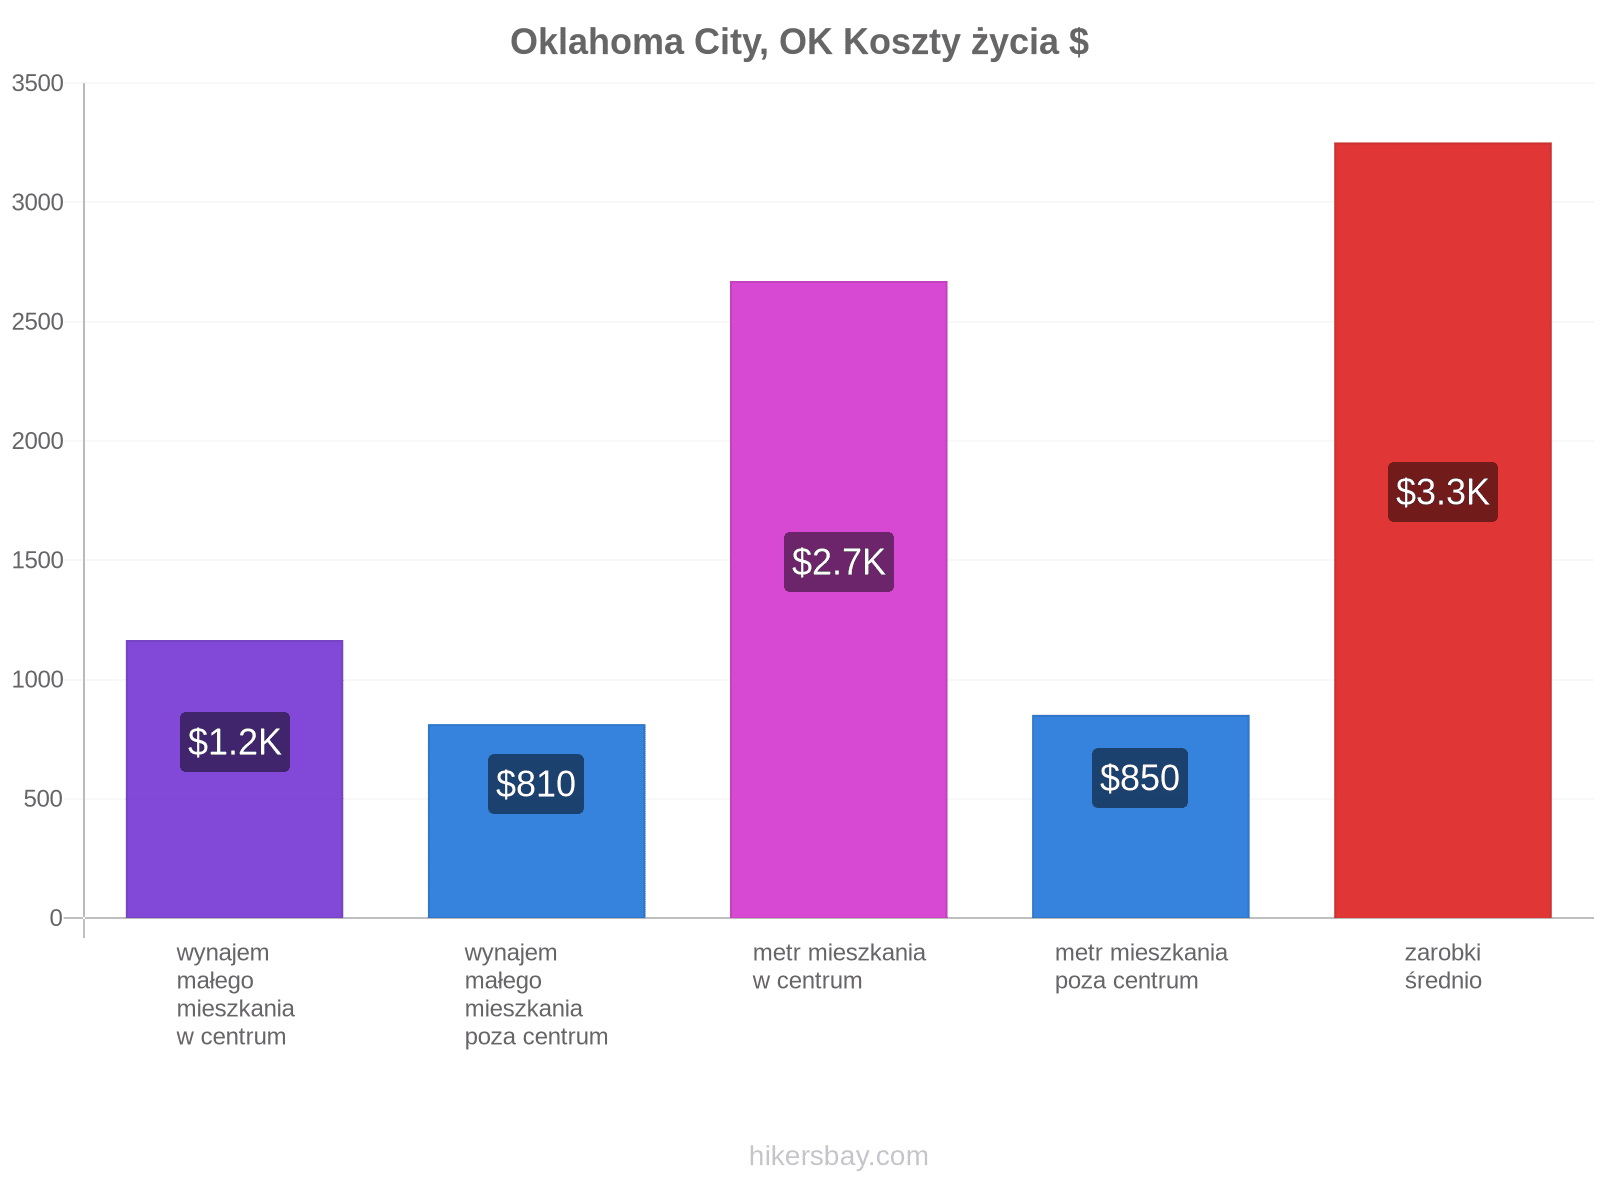 Oklahoma City, OK koszty życia hikersbay.com